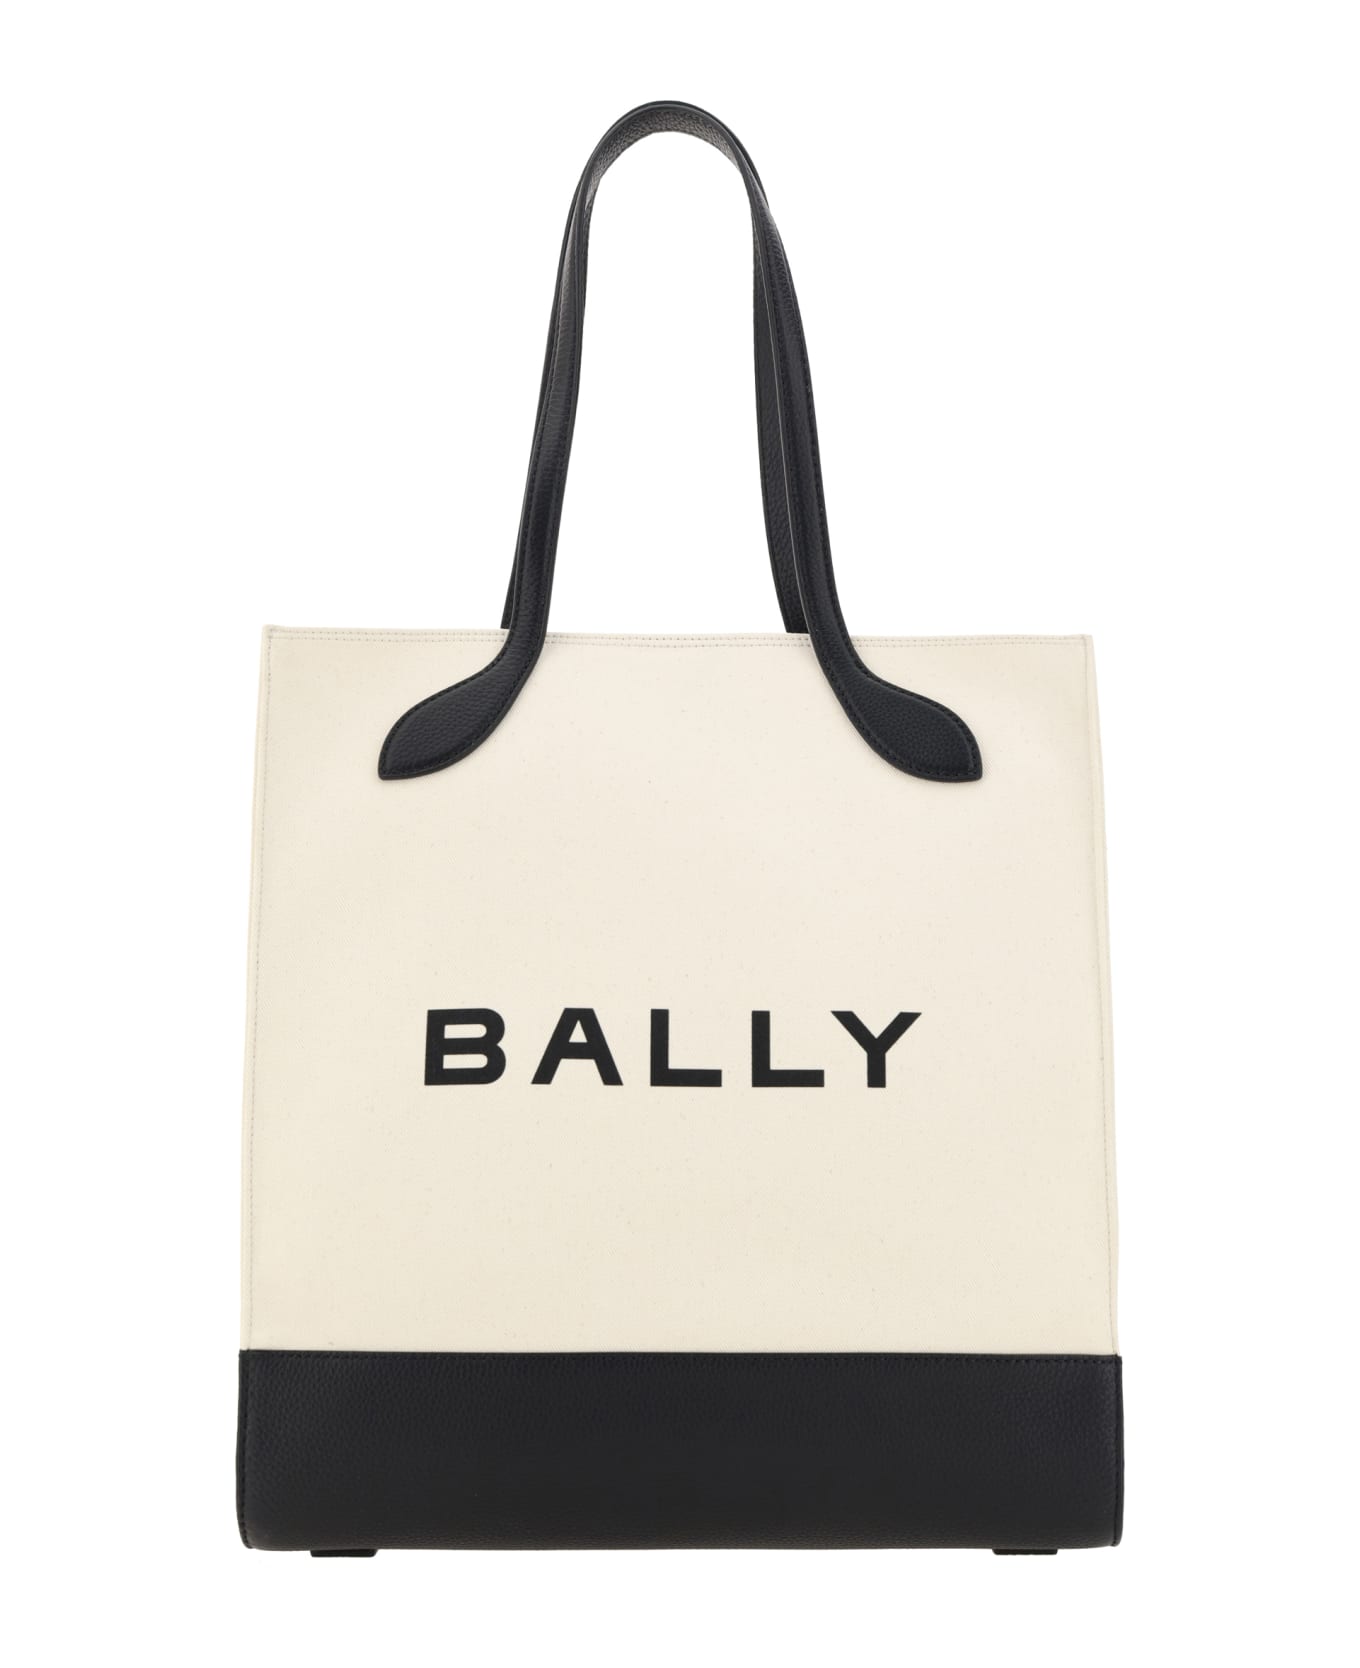 Bally Tote Shoulder Bag - NEUTRALS/BLACK